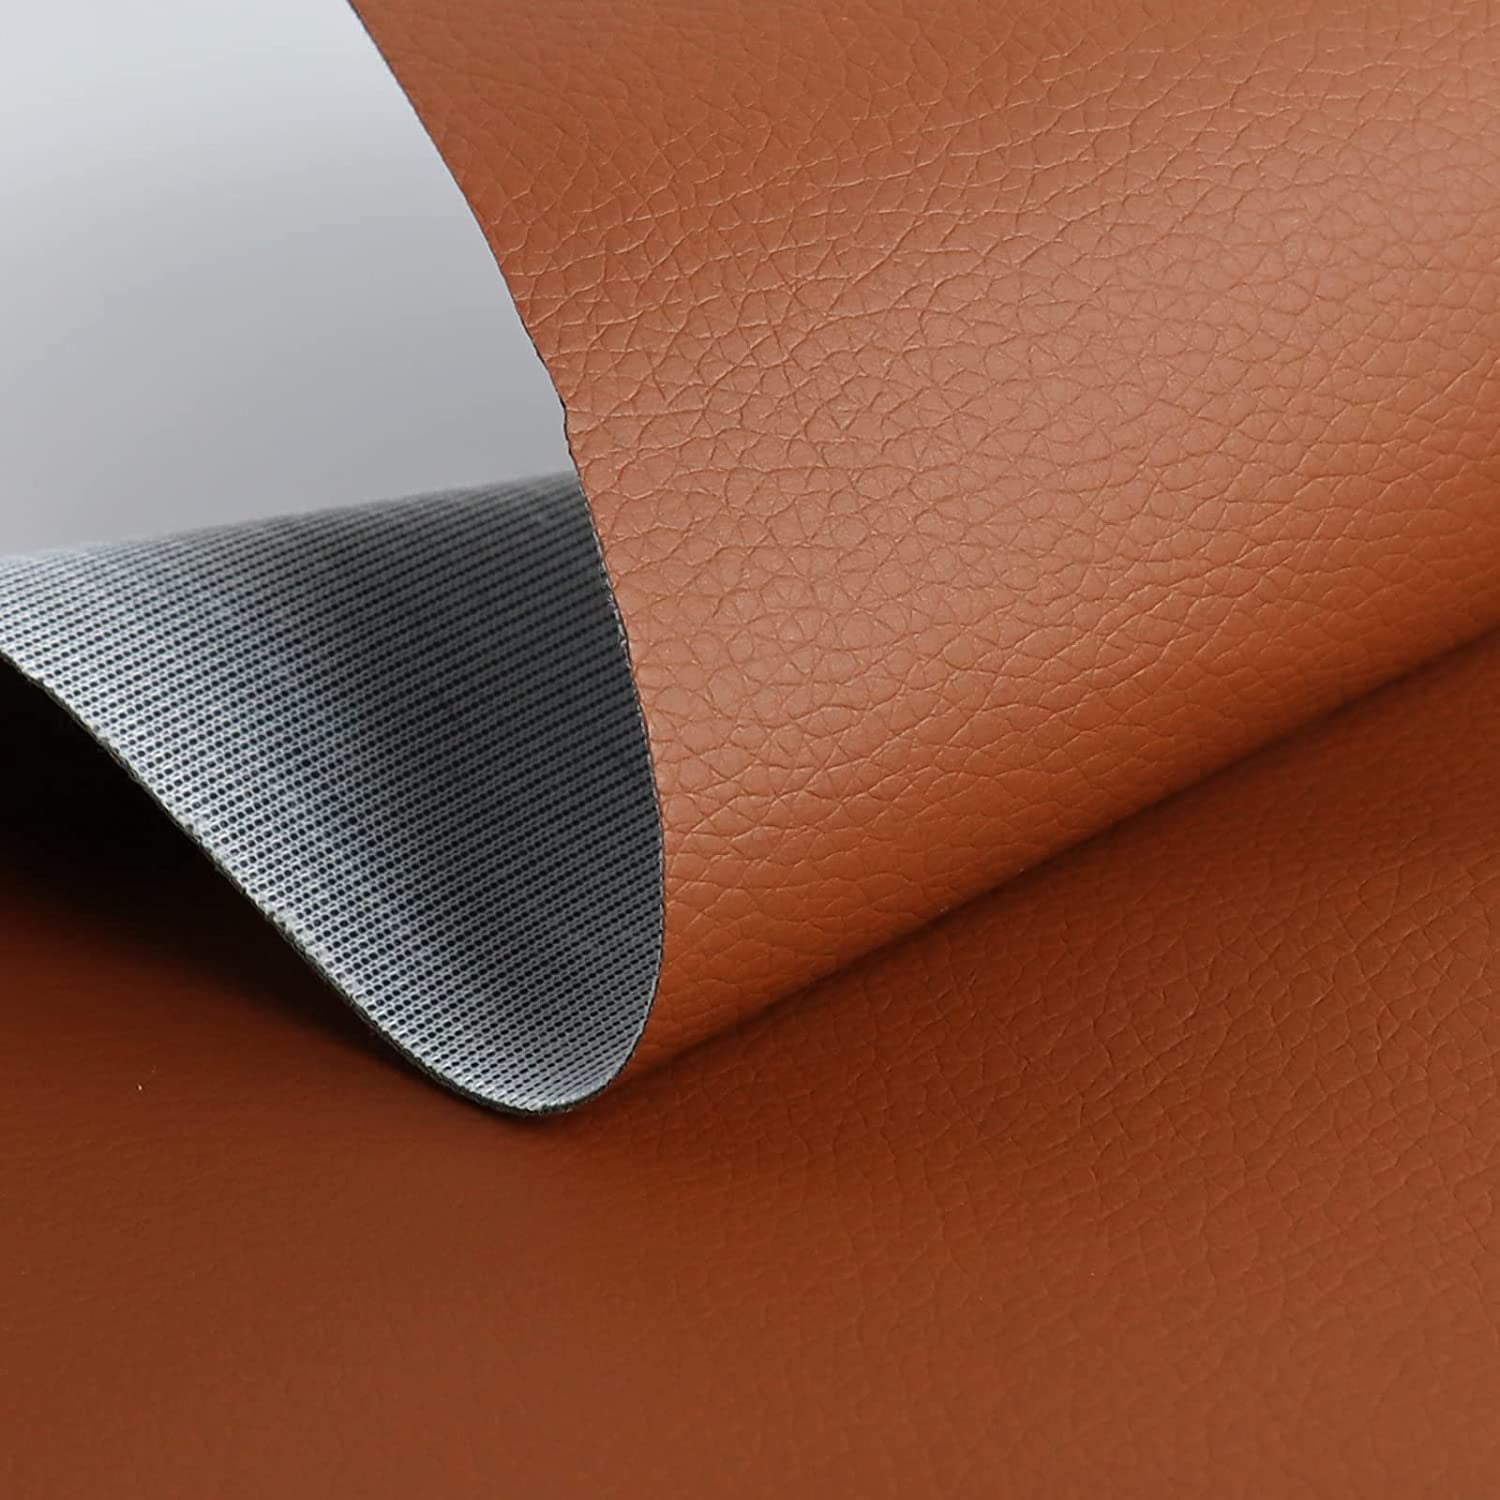 Apple Polishing Cloth teardown: 'Intricately' woven, synthetic leather feel